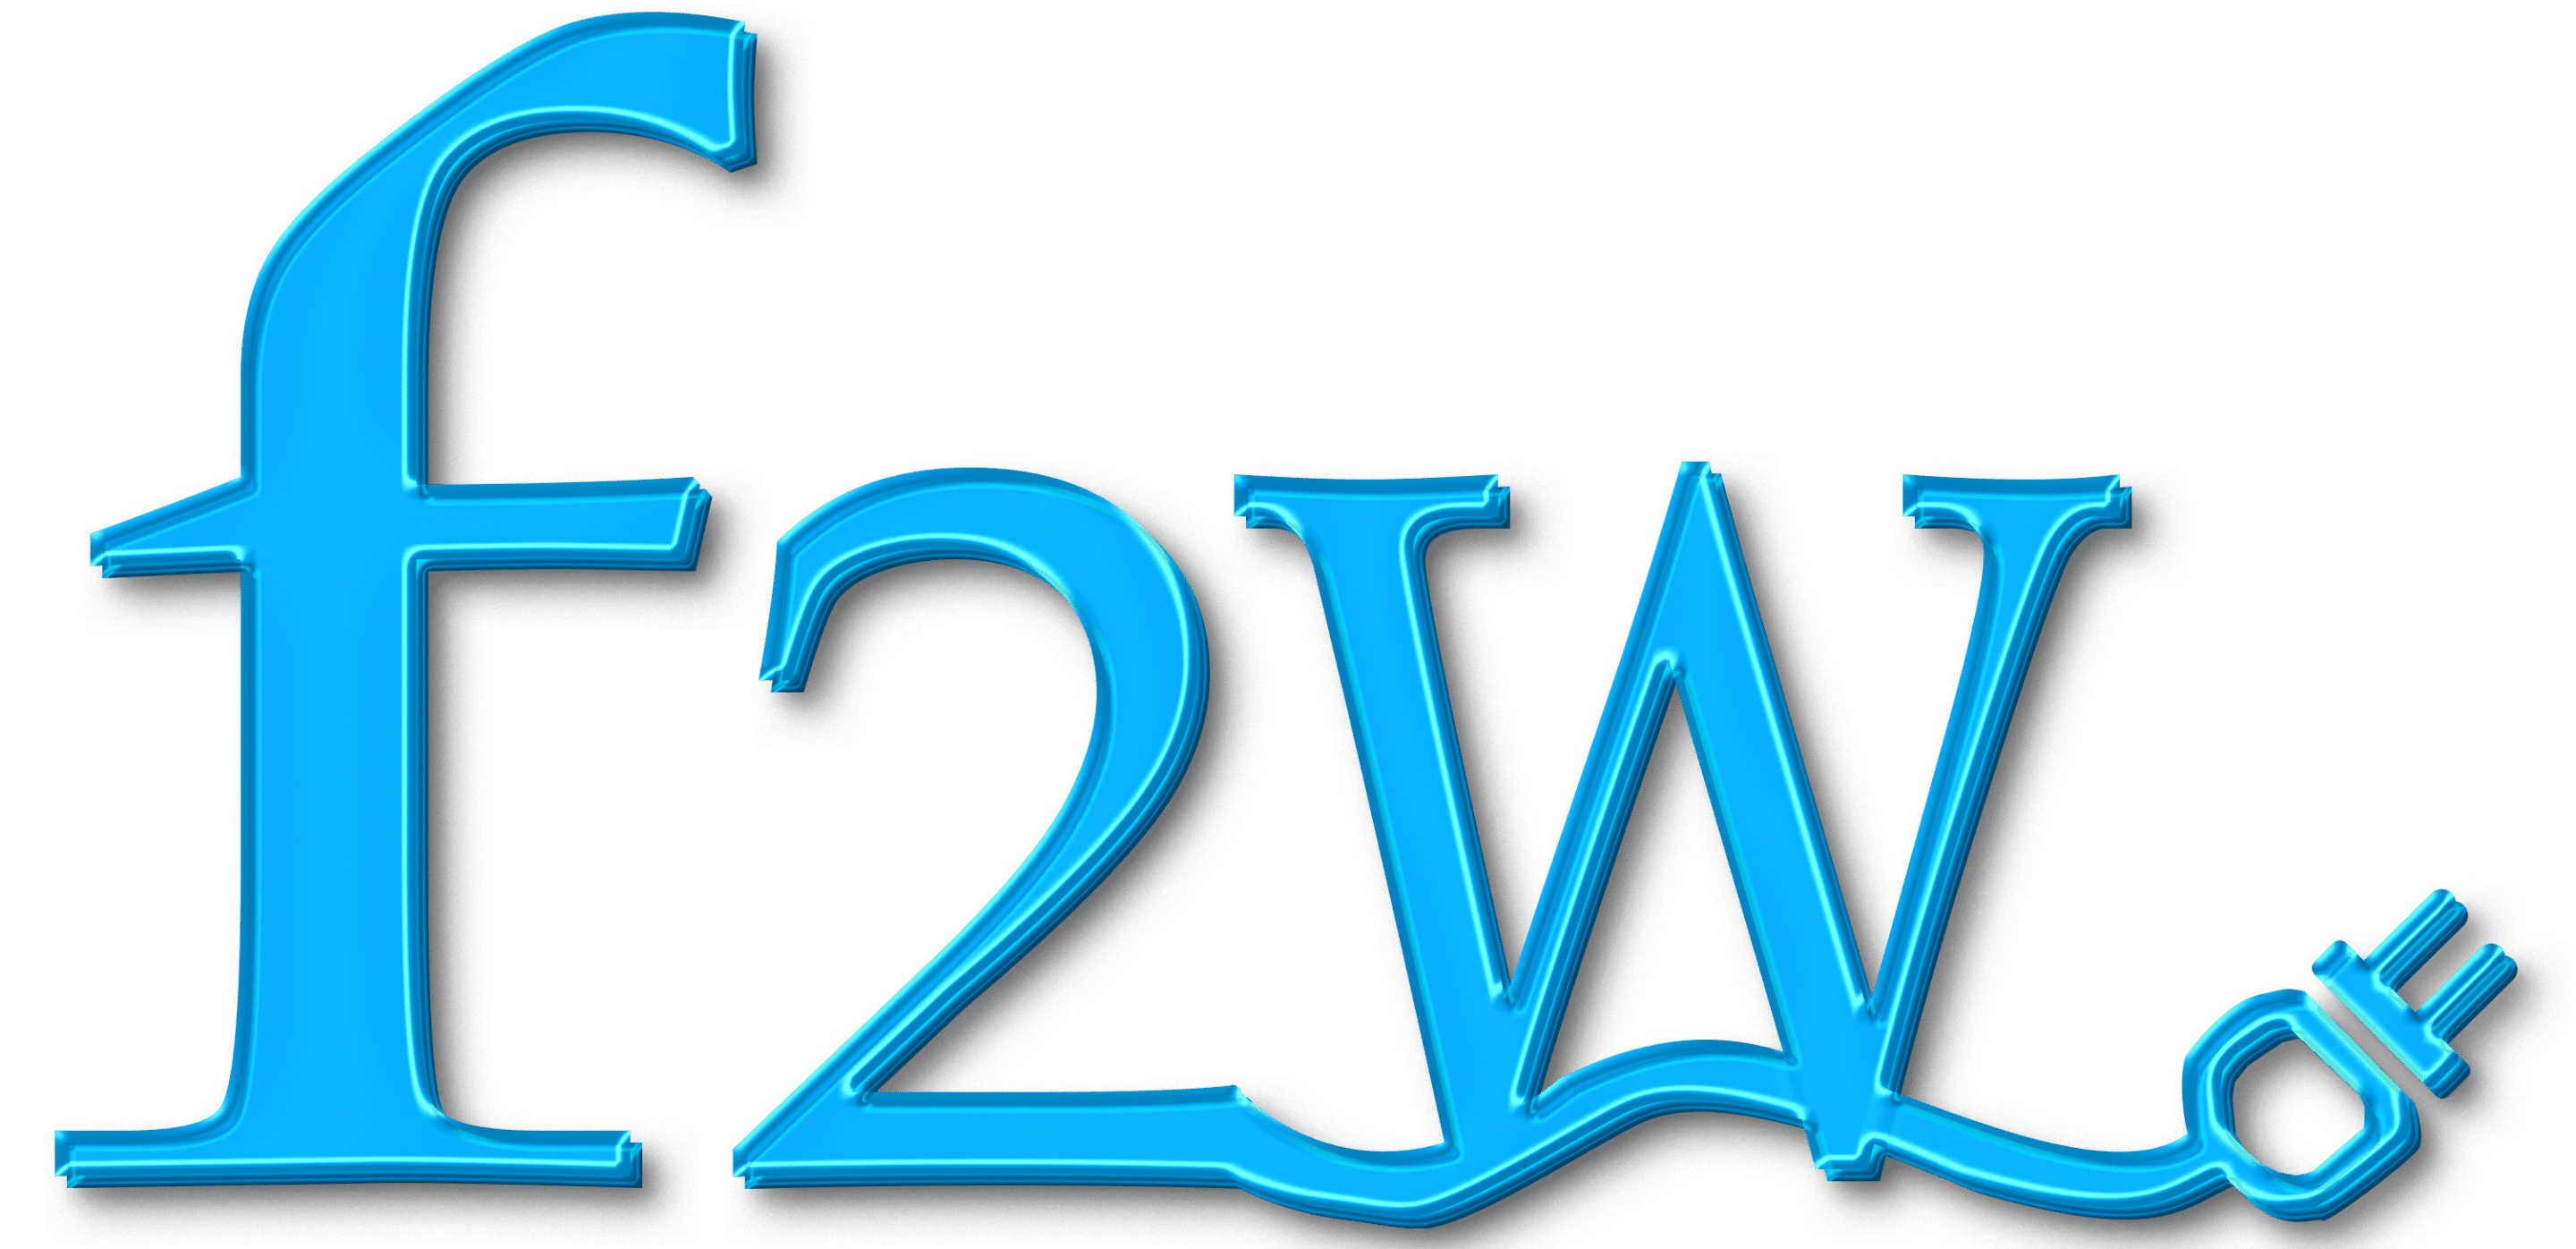 Flow 2 Wire logo